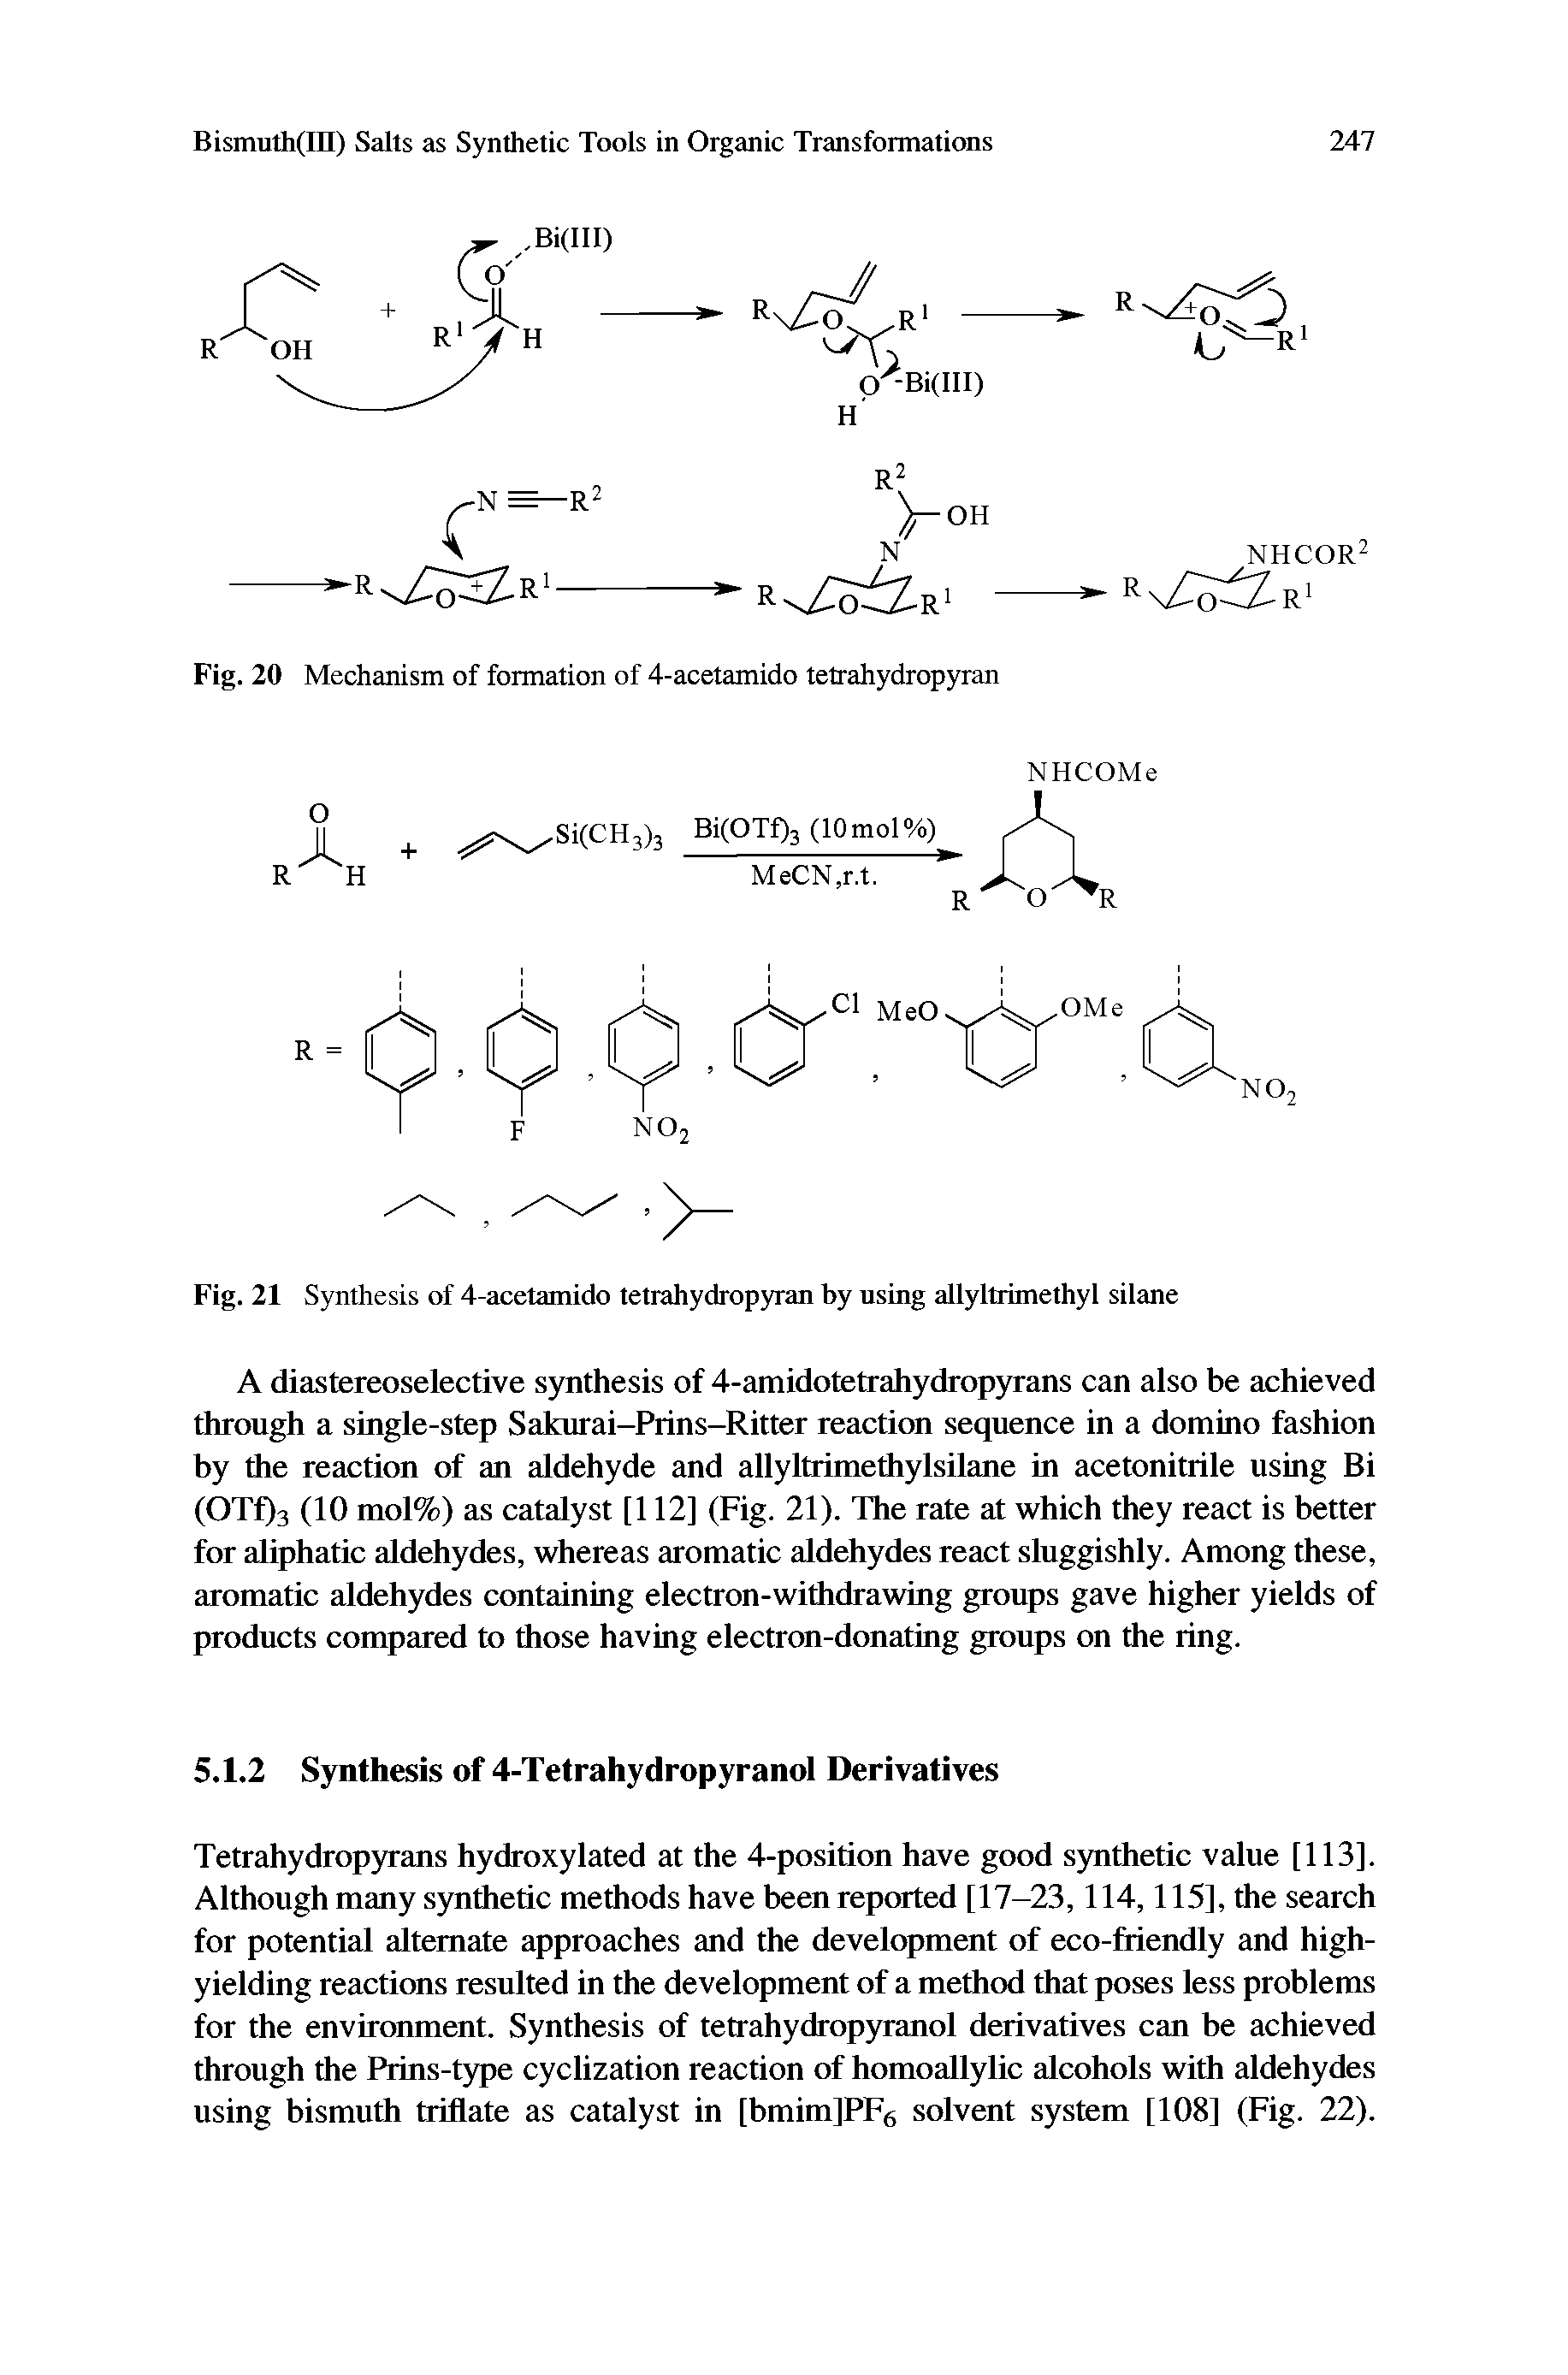 Fig. 21 Synthesis of 4-acetamido tetrahydropyran by using allyltrimethyl silane...